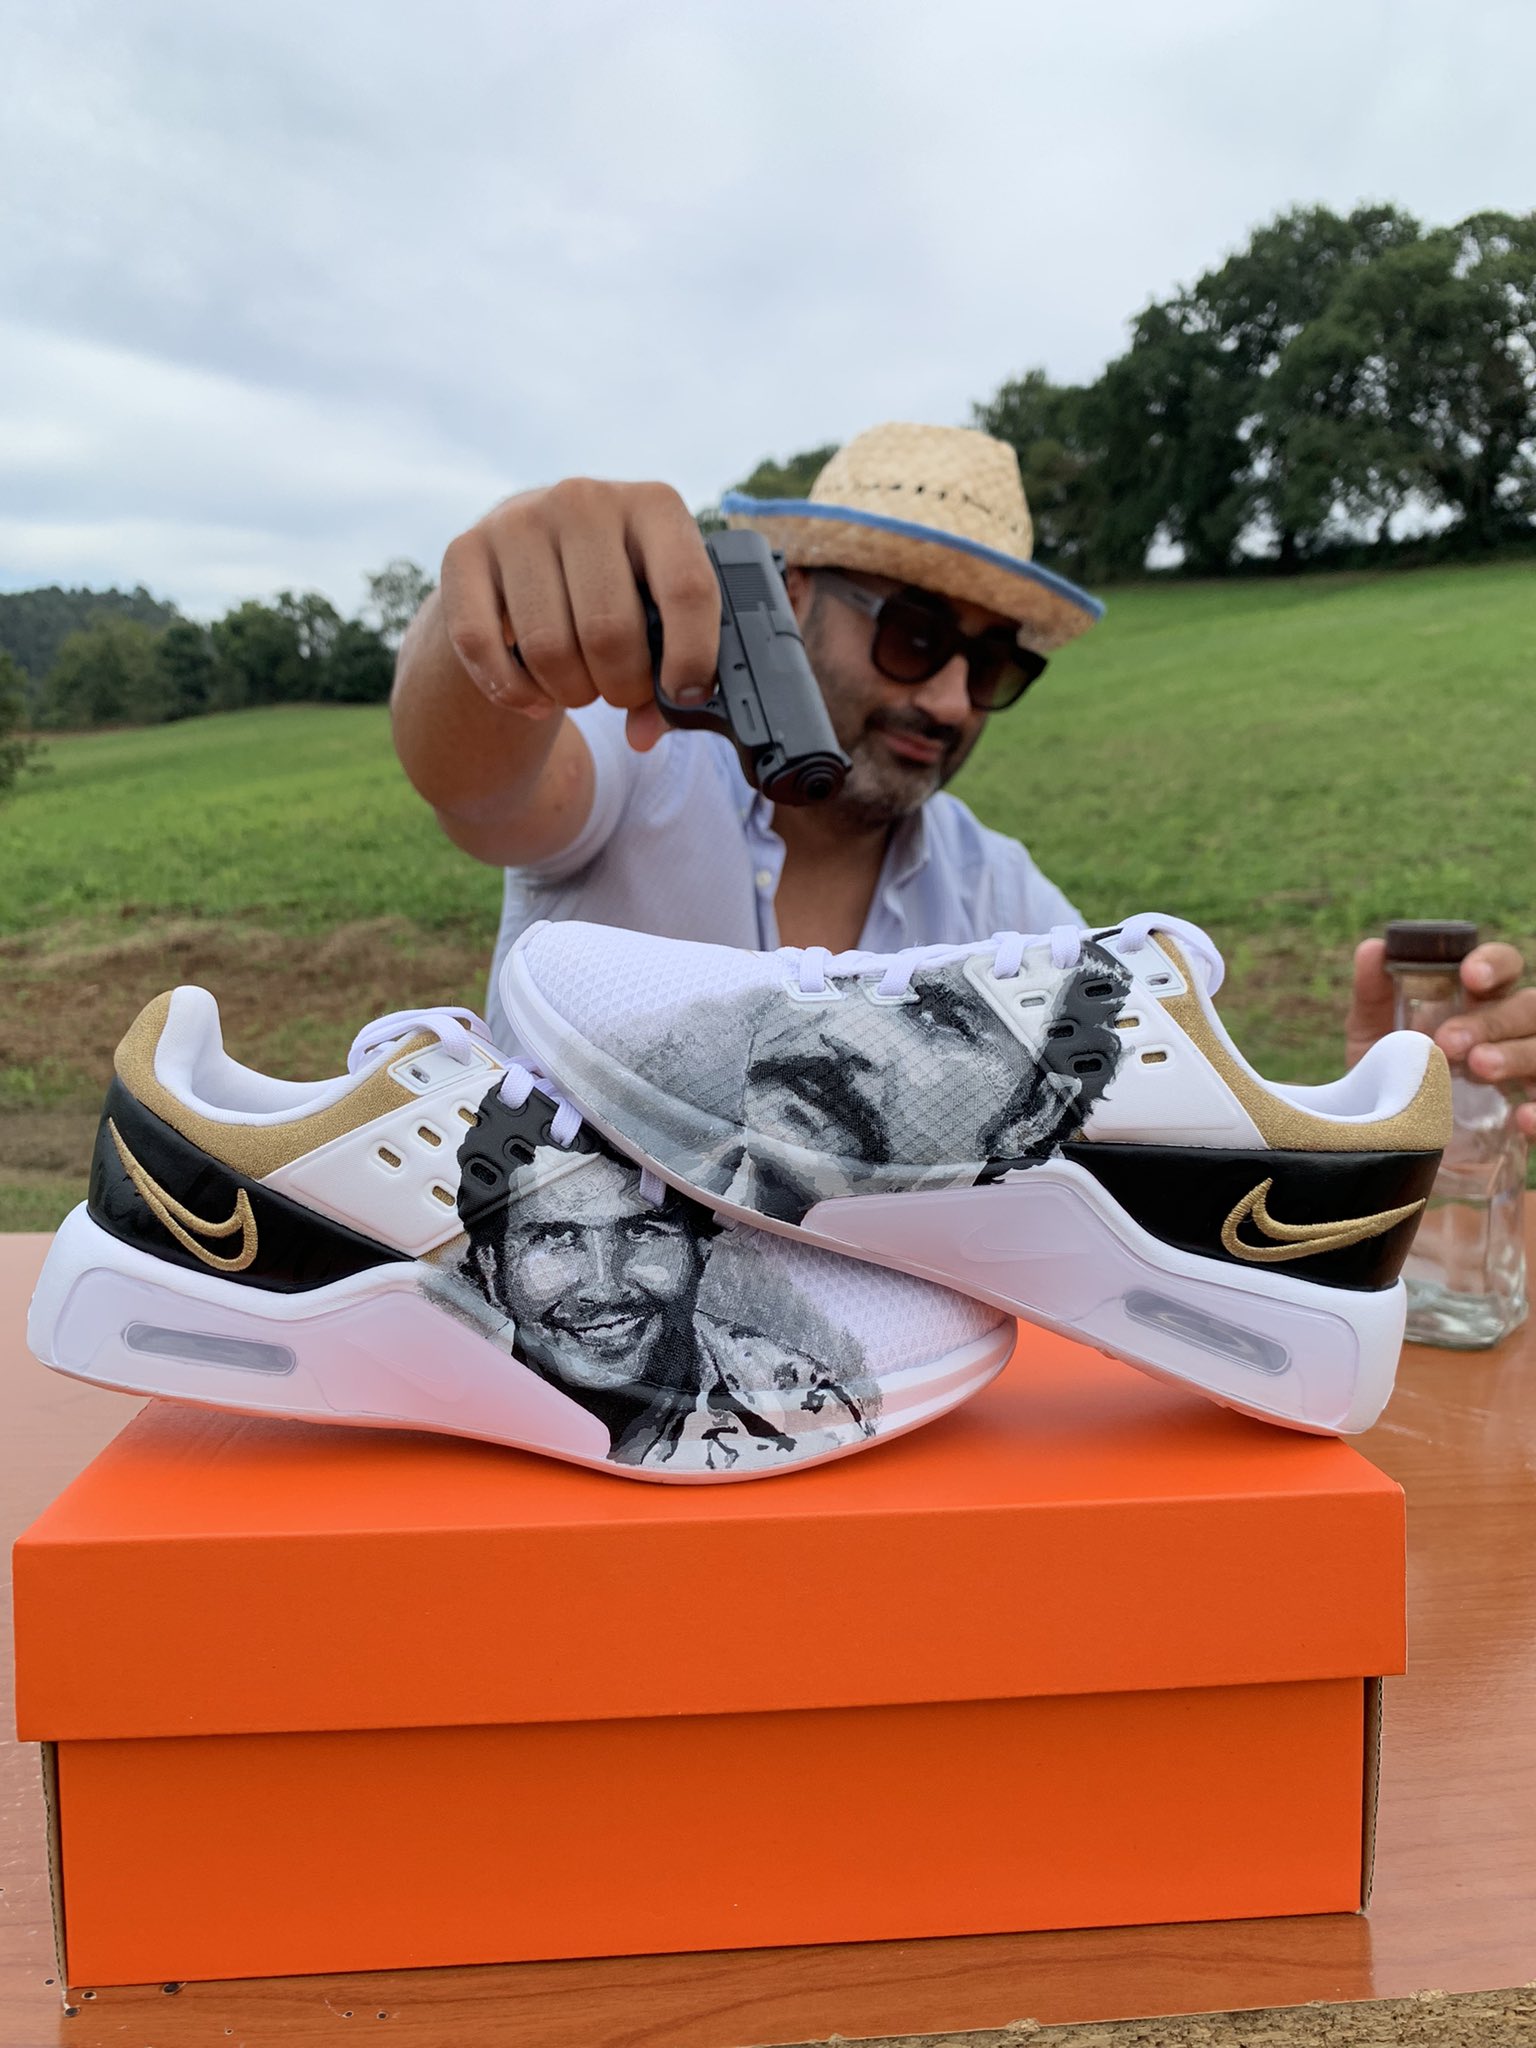 graduado sarcoma vértice Fran on Twitter: "Personalización zapatillas @Nike Pablo Escobar con  pinturas @AngelusBrand “Plata…o Plomo” #elpatron #custom #Netflix #Narcos  #handpainted #PabloEscobar #nike #AIRMAX #arte https://t.co/y88pC3ypzw" /  Twitter